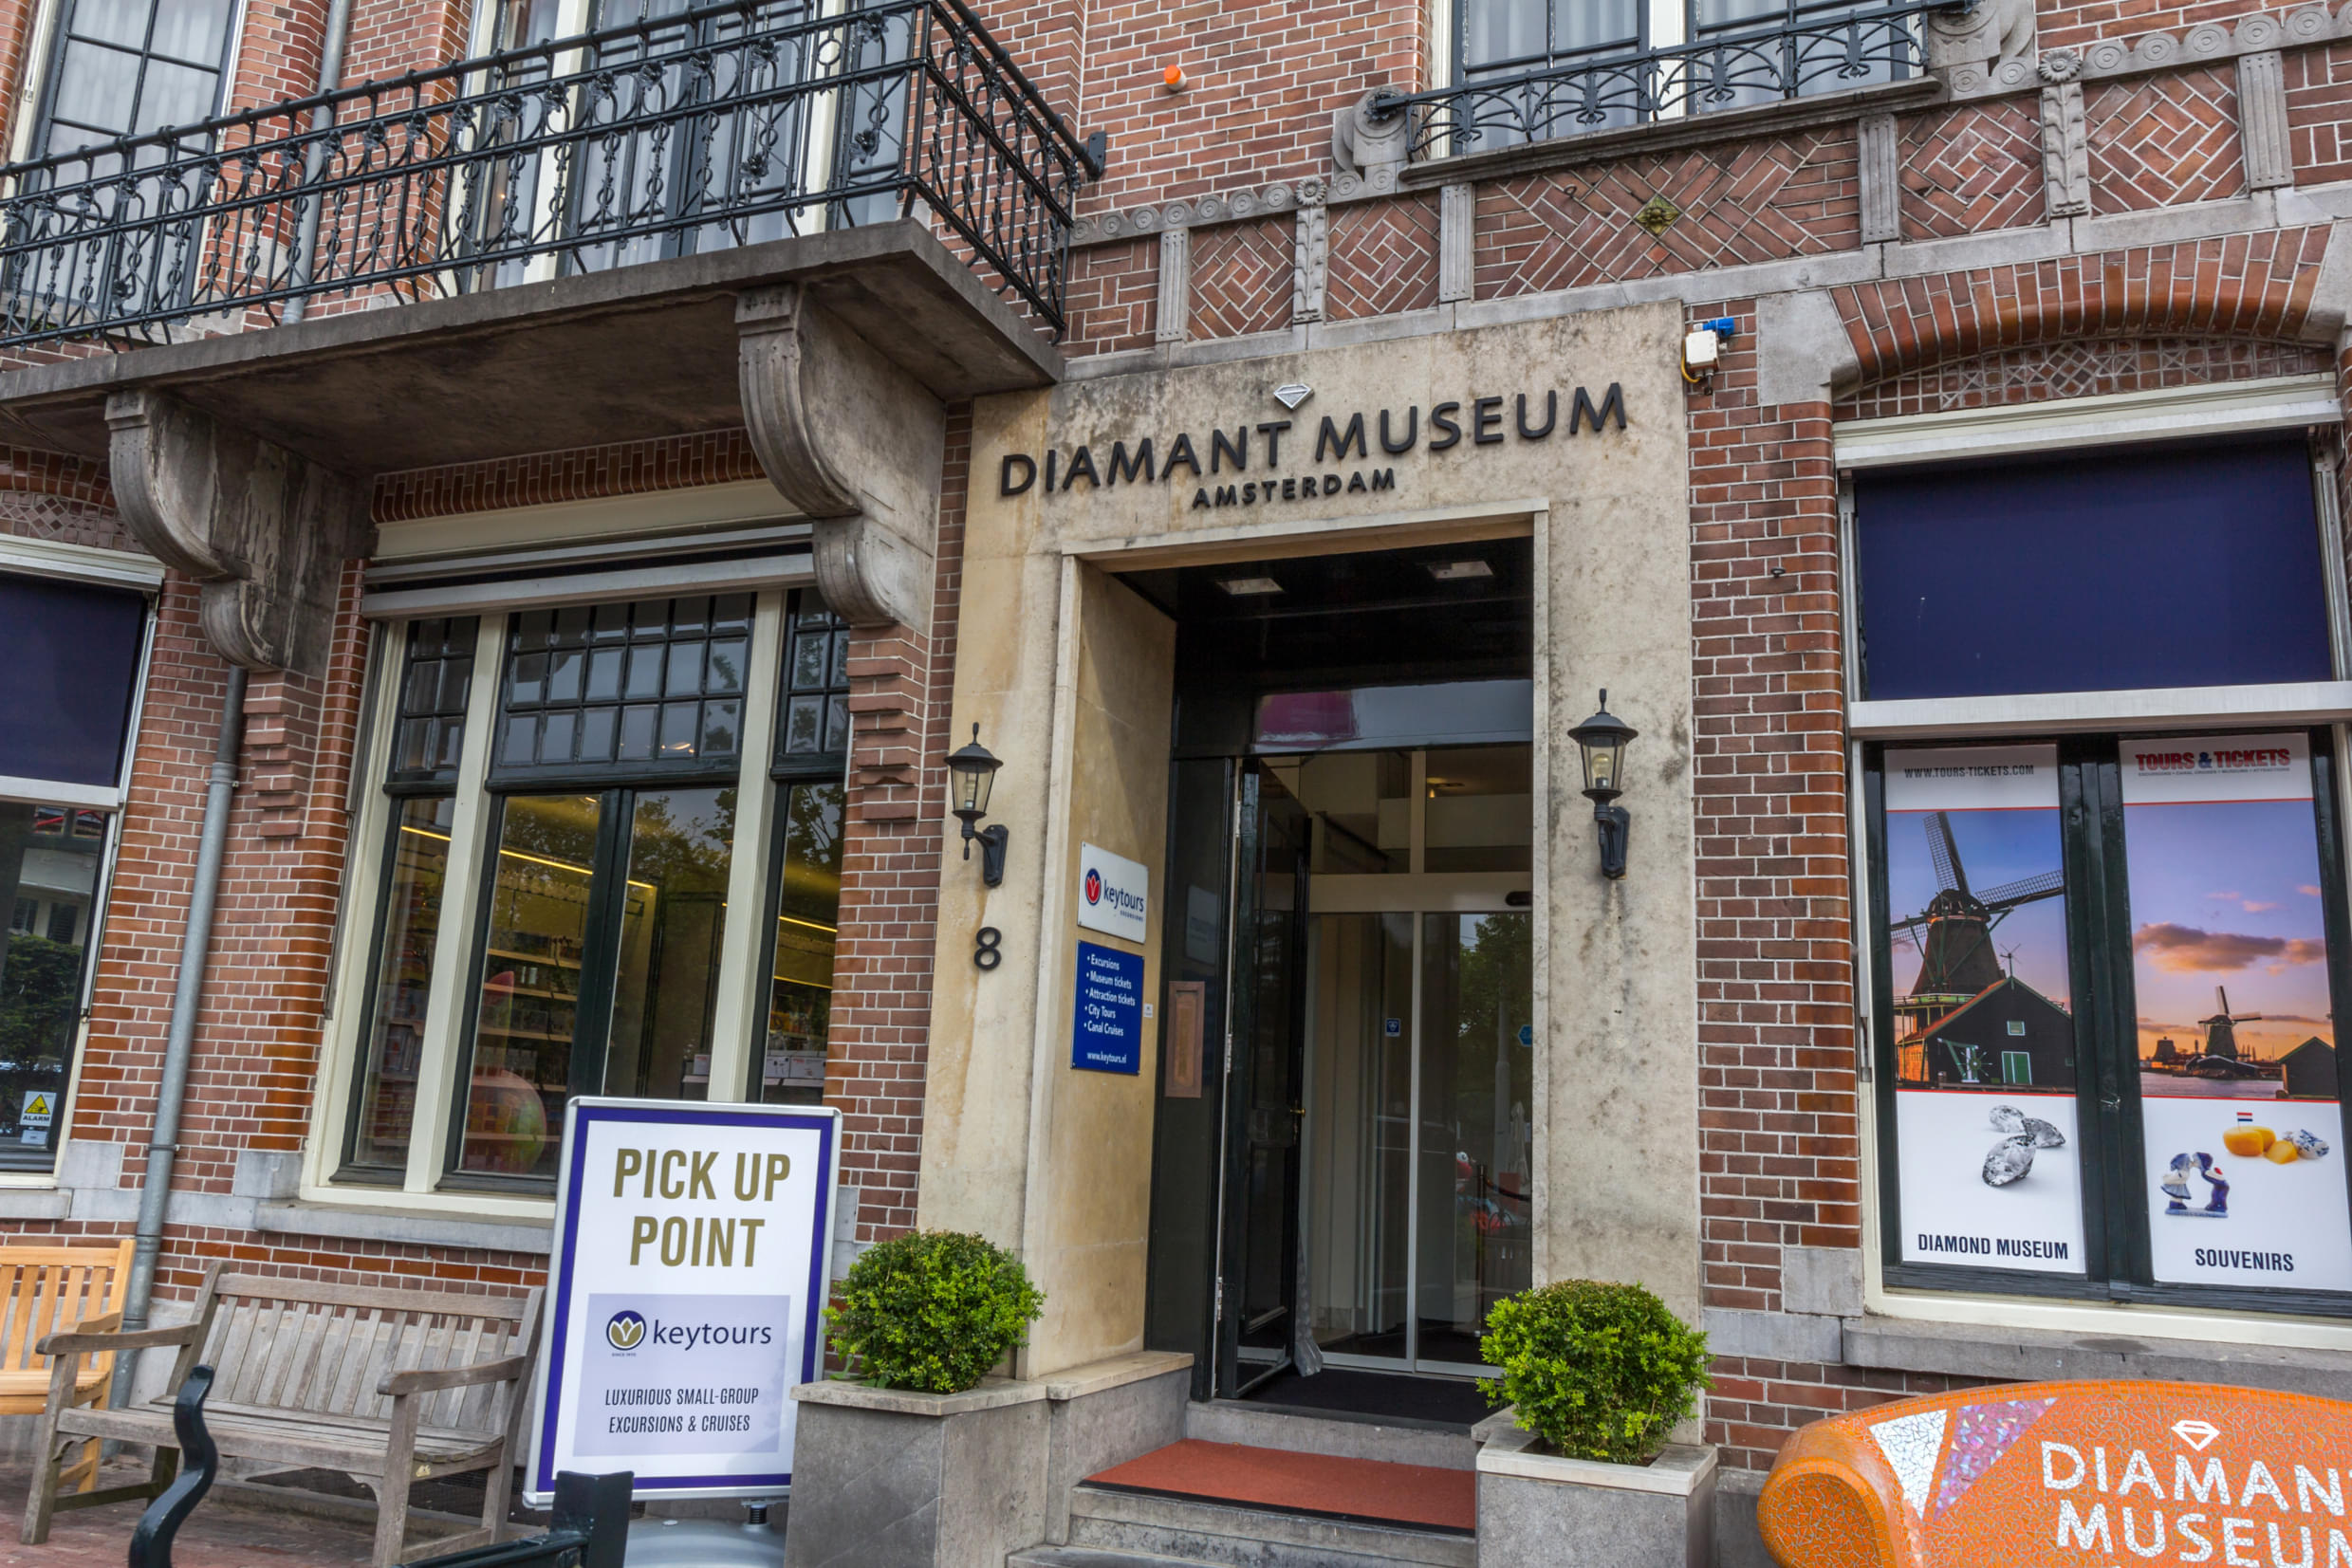 Diamant Museum Amsterdam Overview